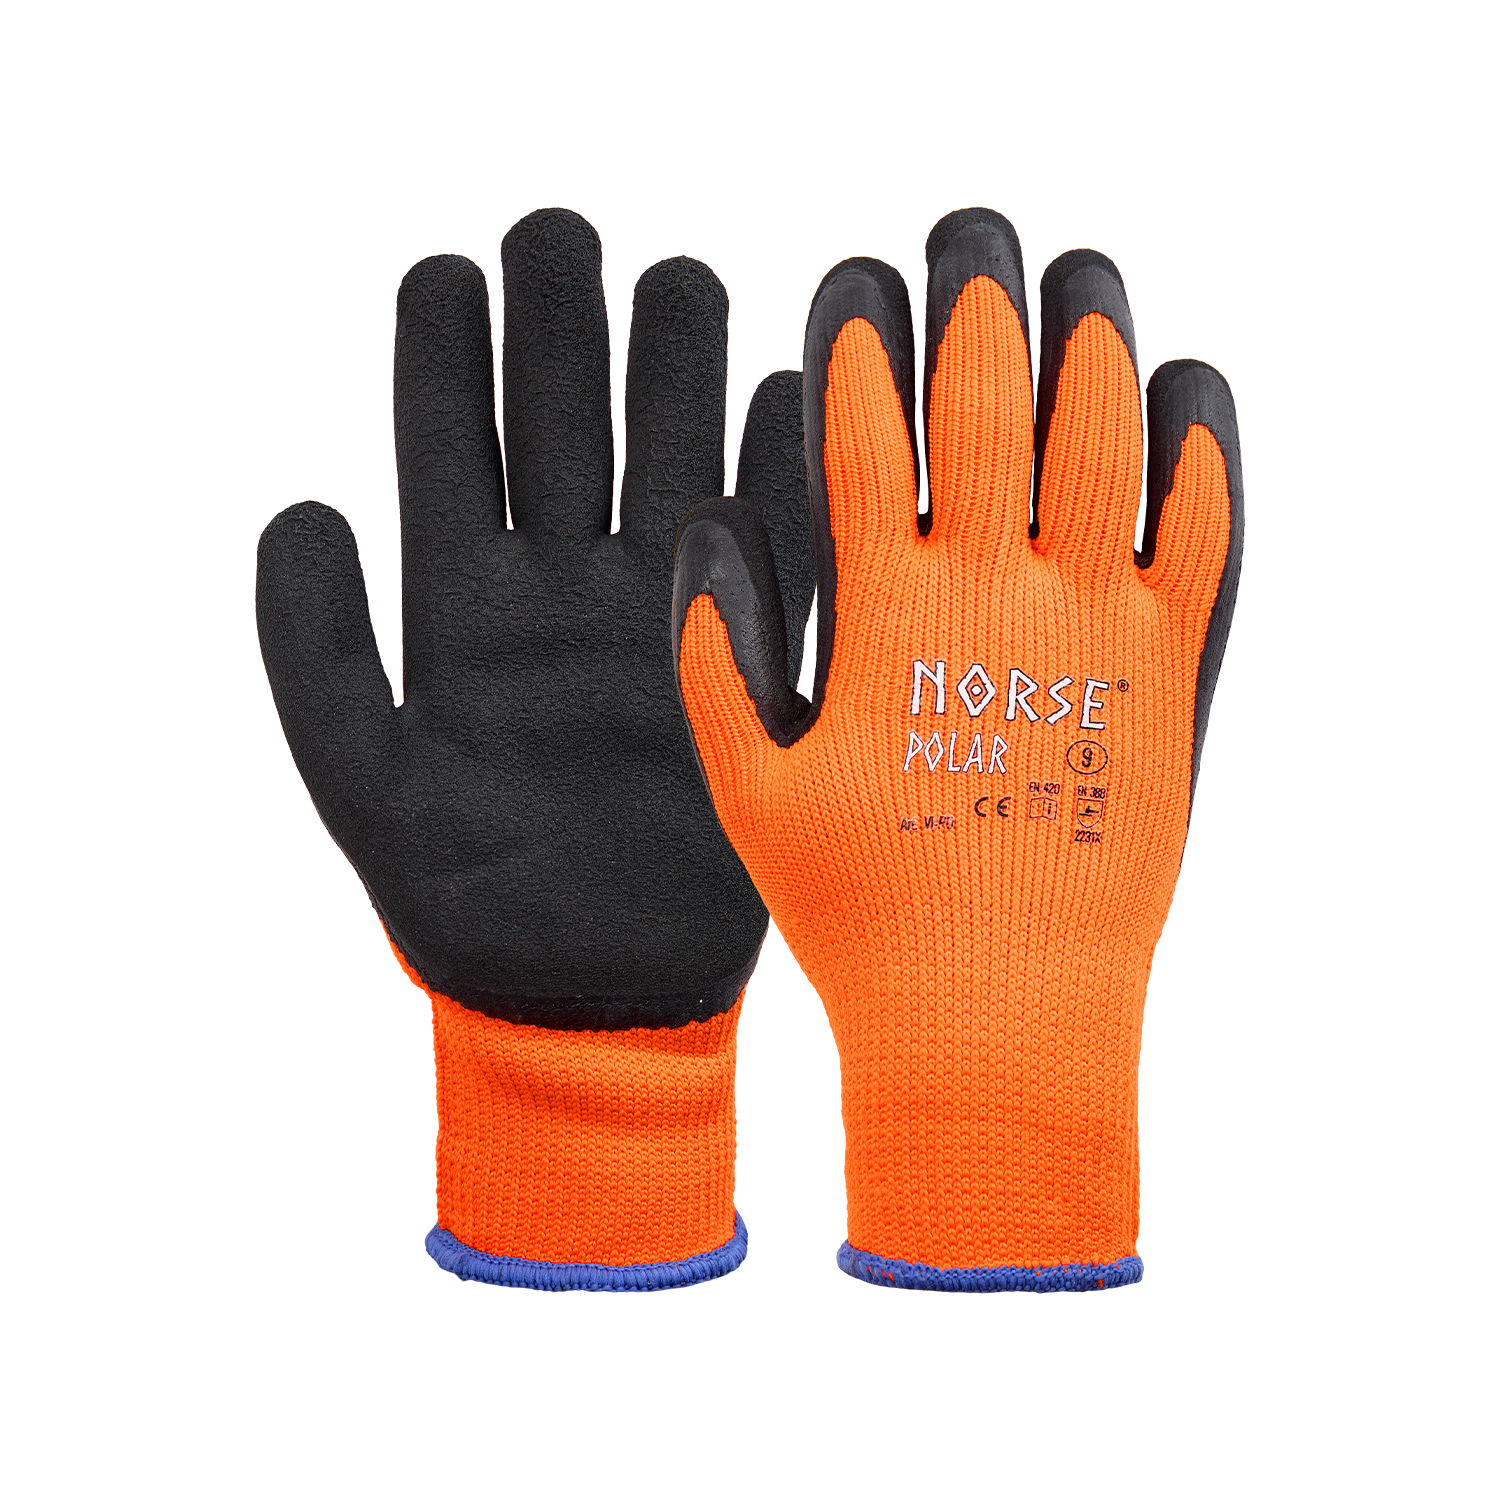 NORSE Polar winter assembly gloves size 8